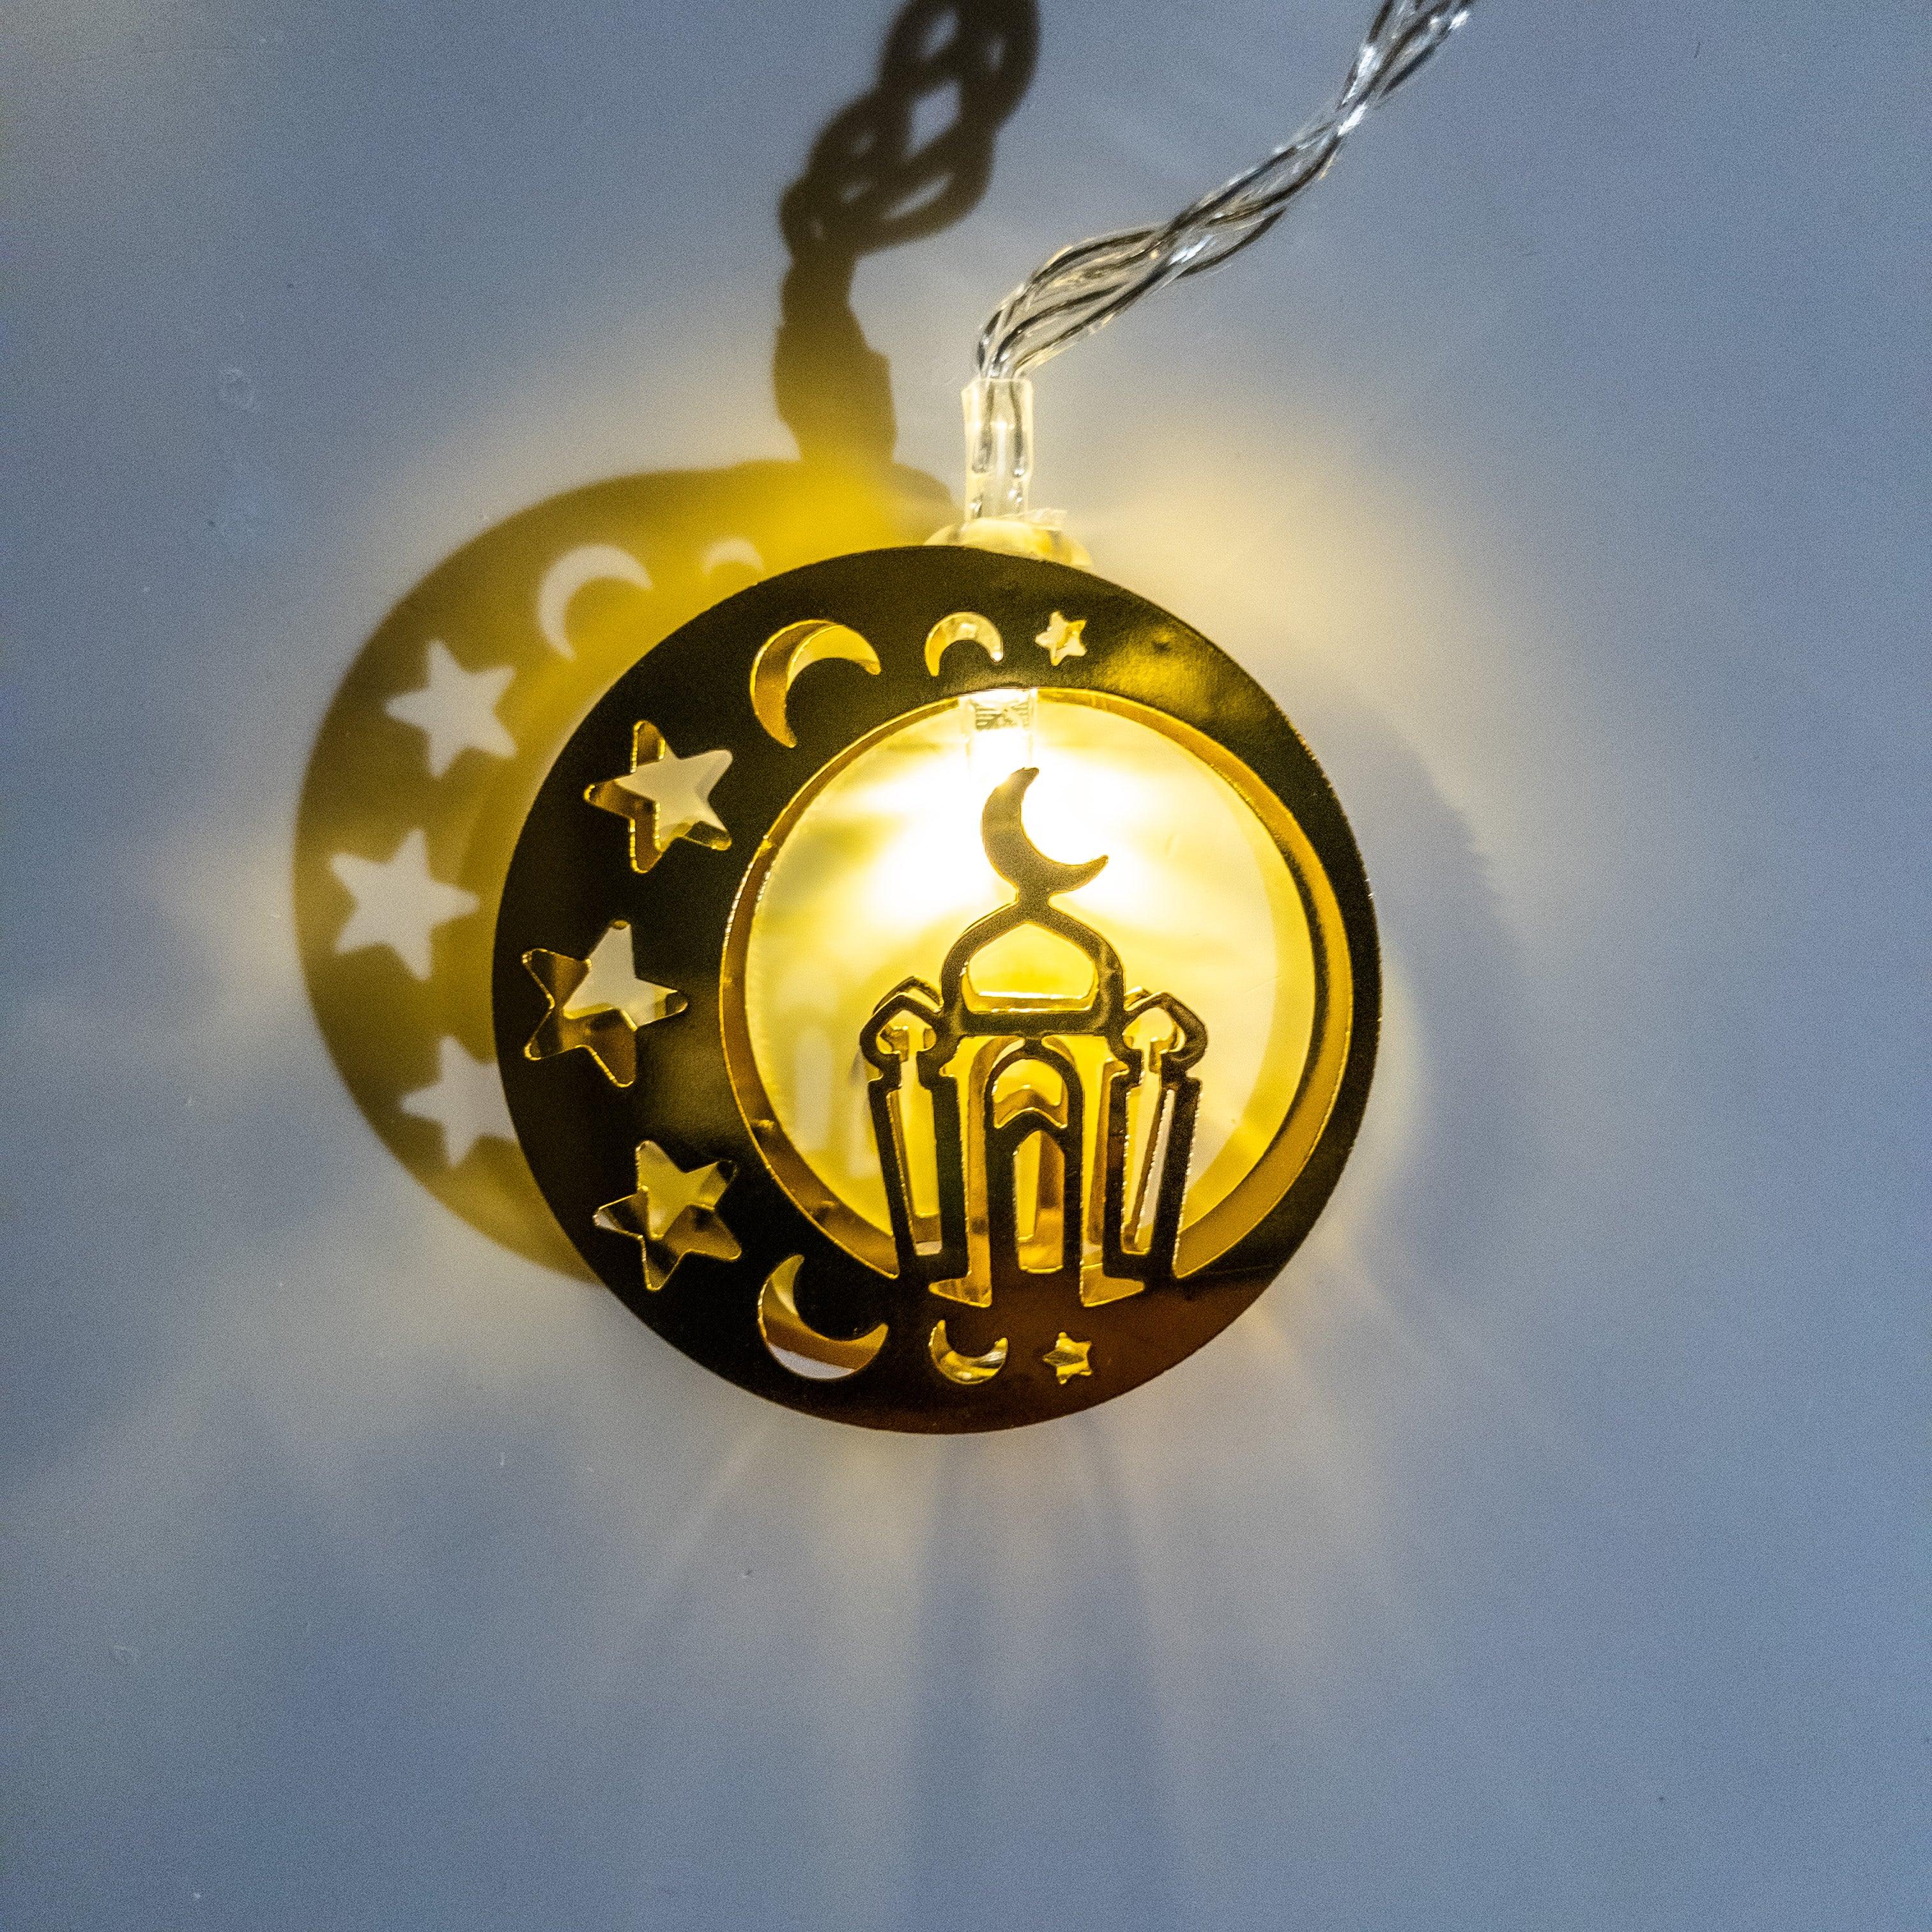 Islamic Themed LED String Lights - eRayyan